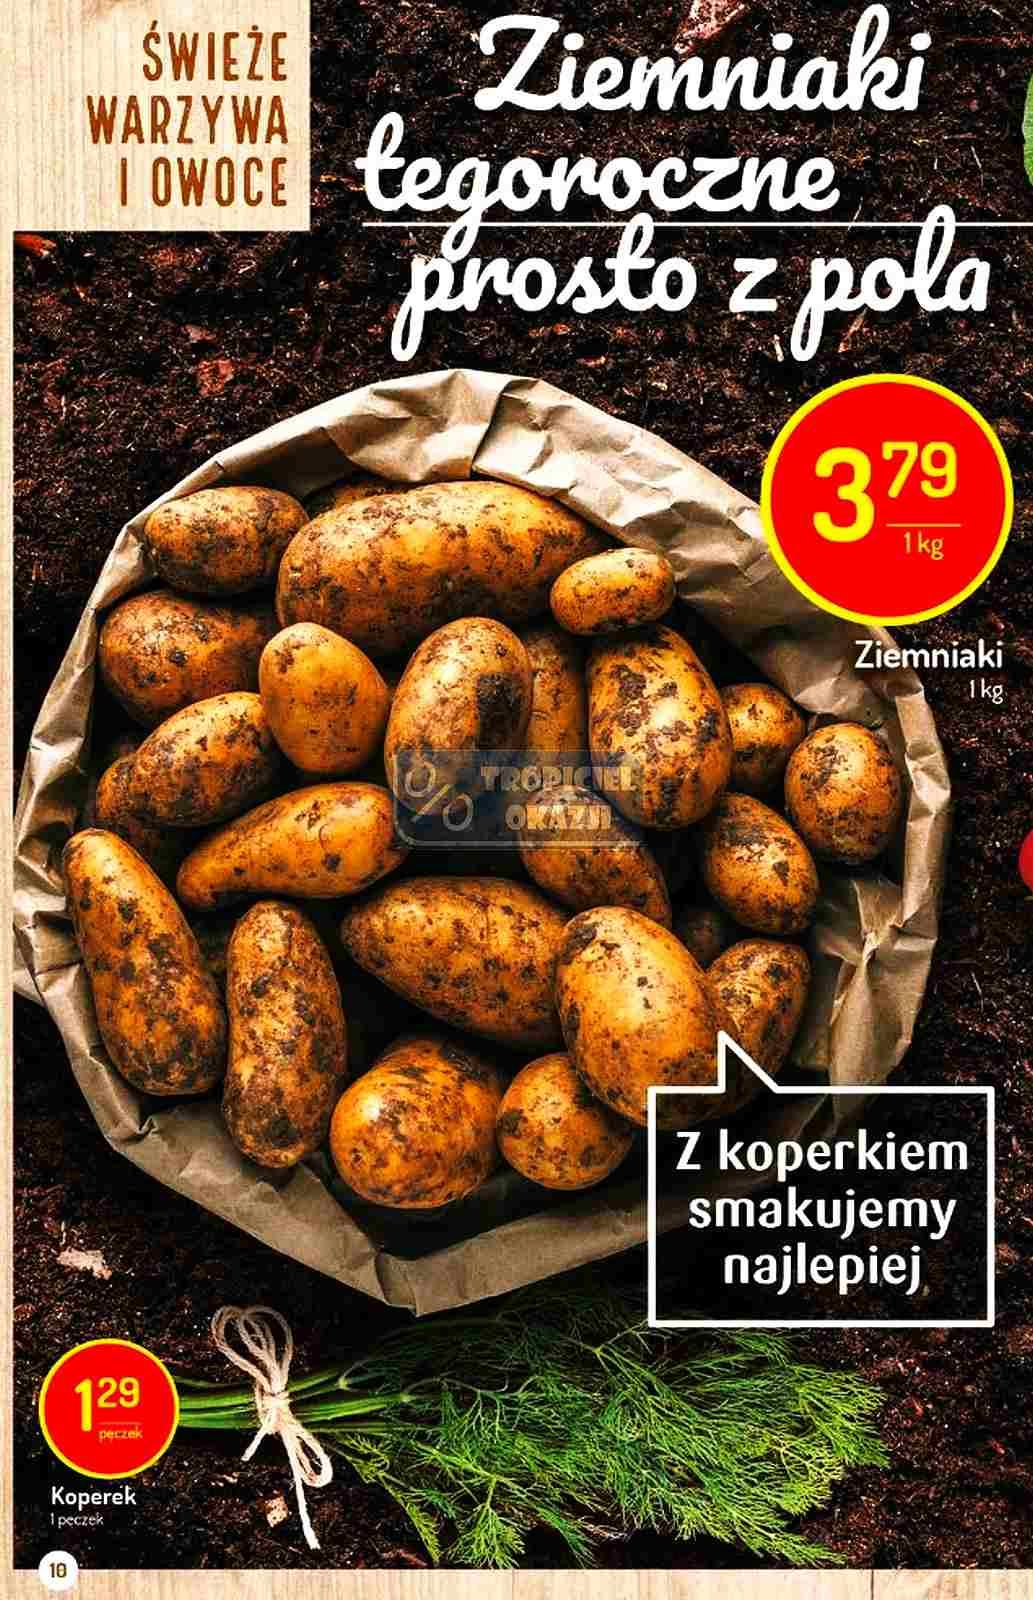 Gazetka promocyjna Delikatesy Centrum do 18/03/2020 str.10